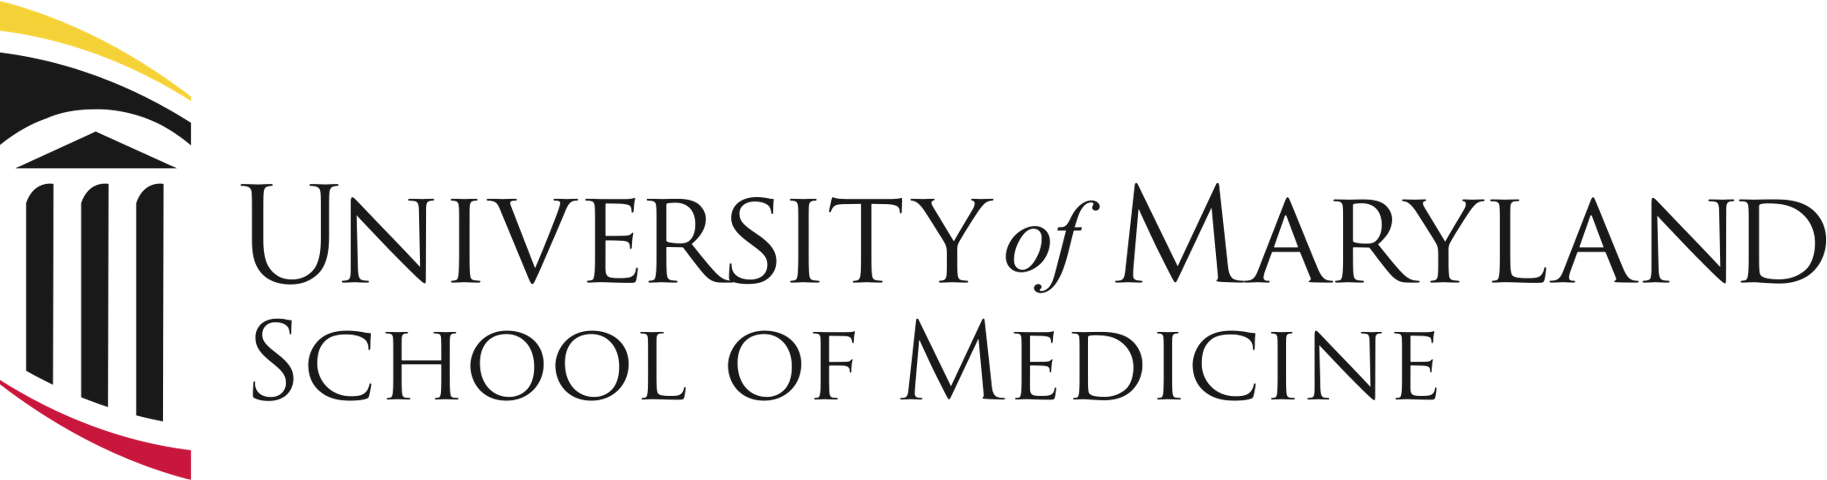 Logo for the University of Maryland School of Medicine